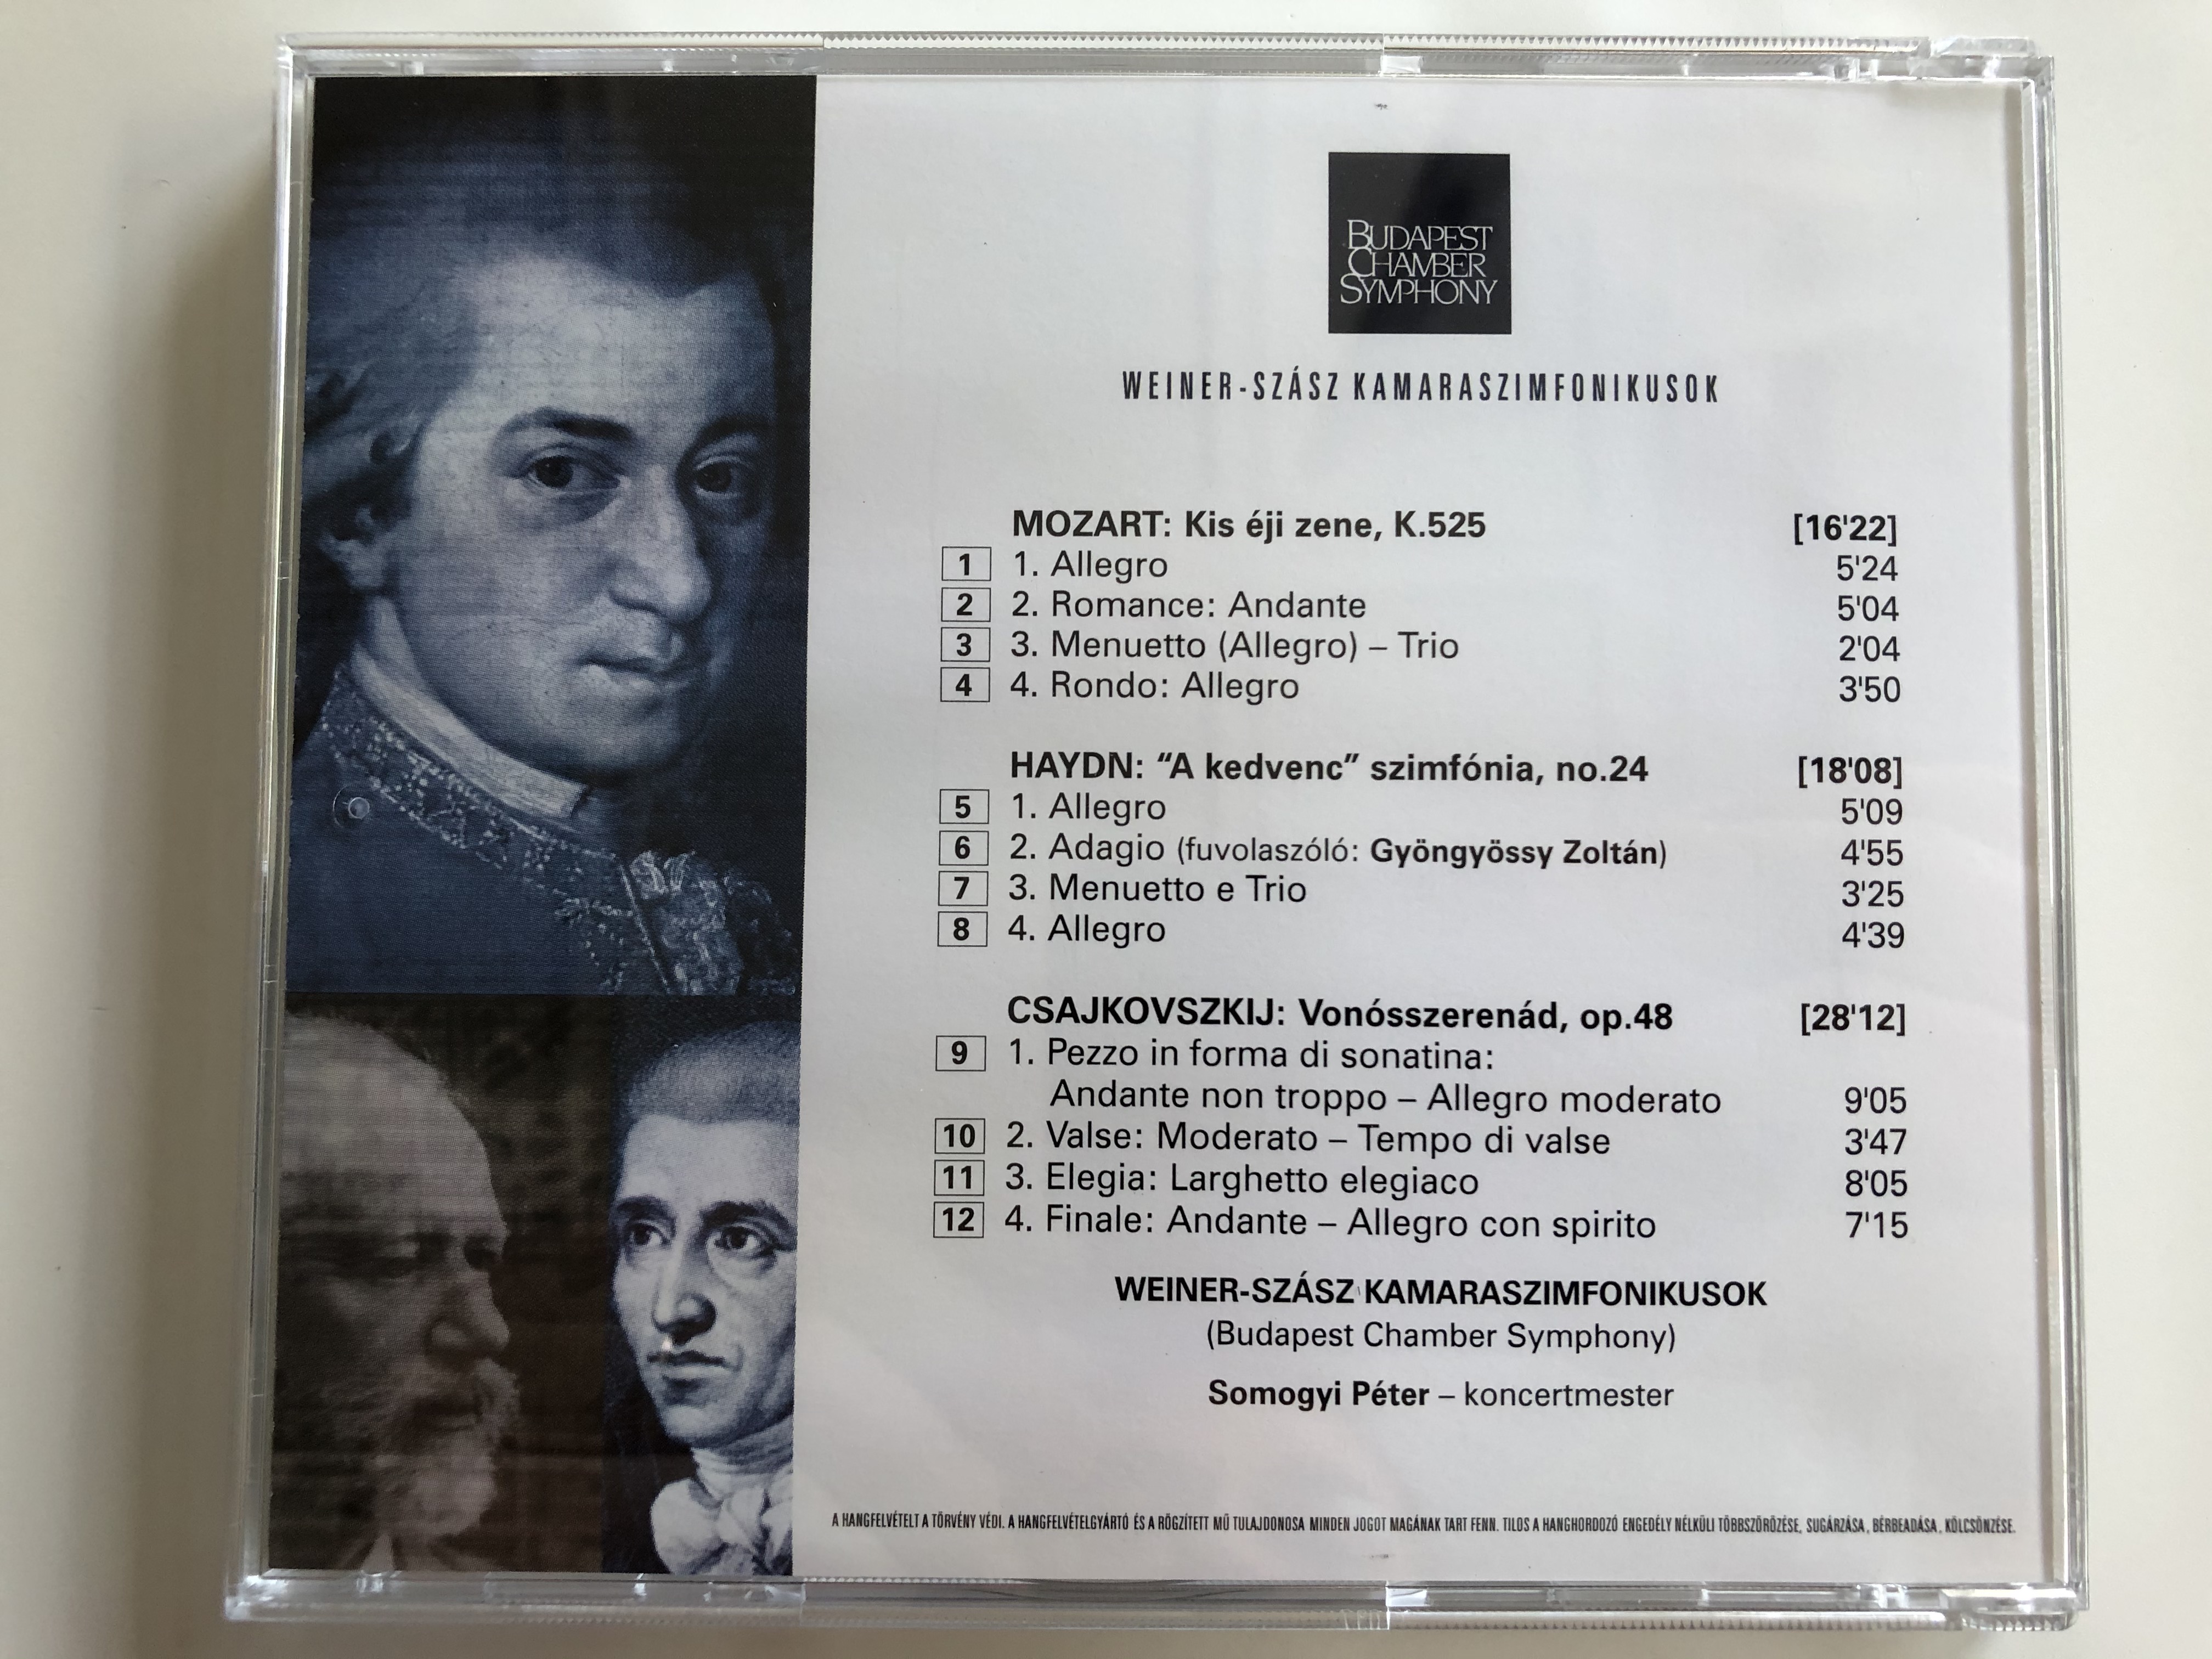 weiner-szasz-budapest-chamber-symphony-haydn-mozart-tchaikovsky-budapest-chamber-symphony-audio-cd-bcs-wsz-010-5-.jpg